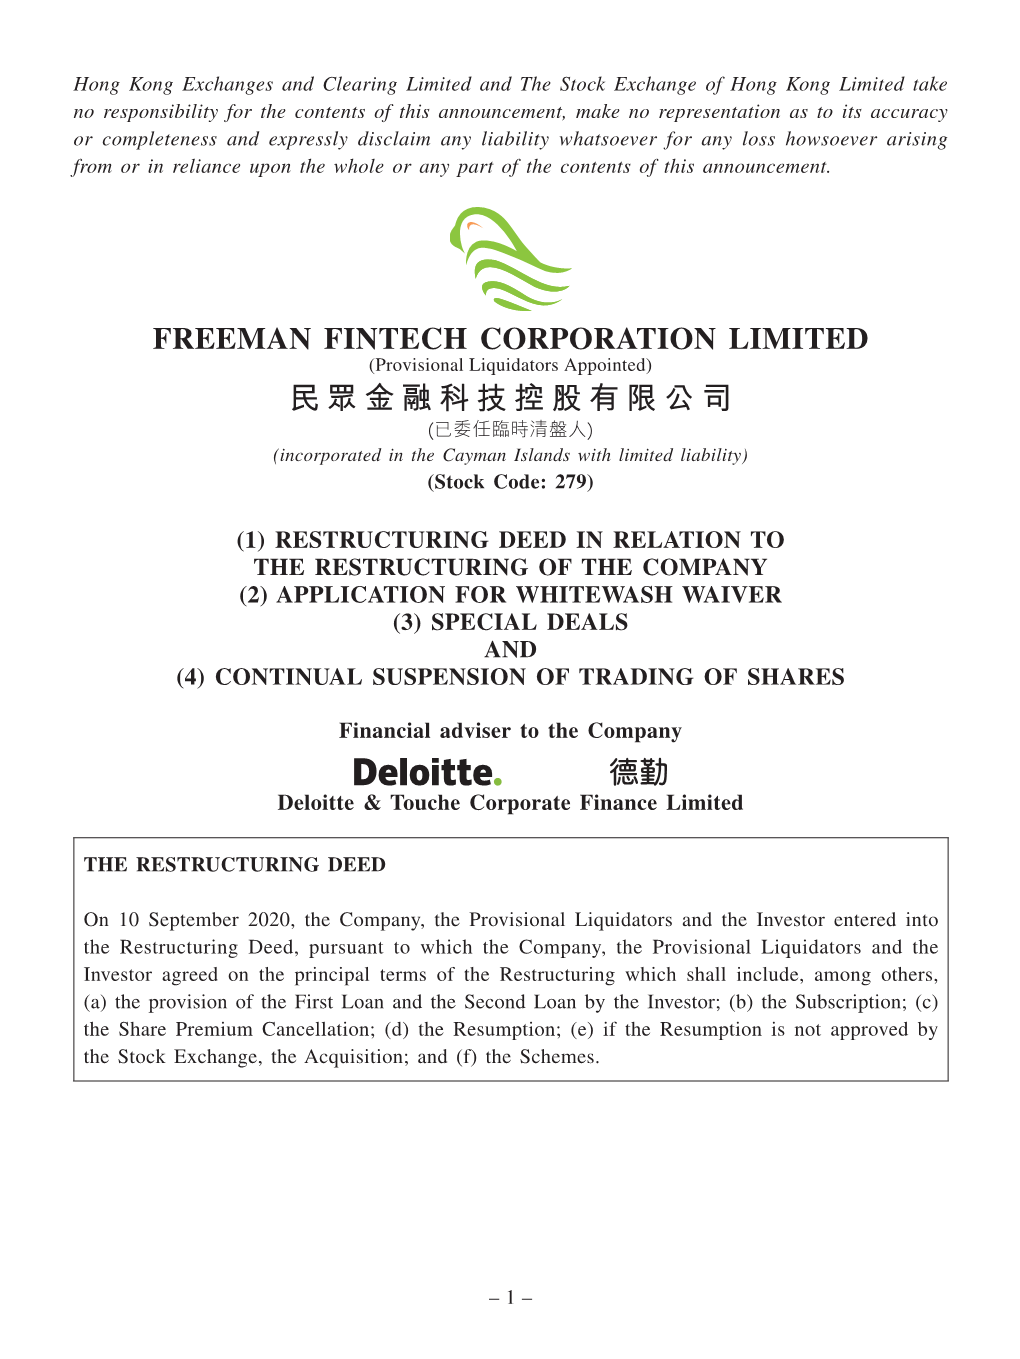 Freeman Fintech Corporation Limited 民眾金融科技控股有限公司